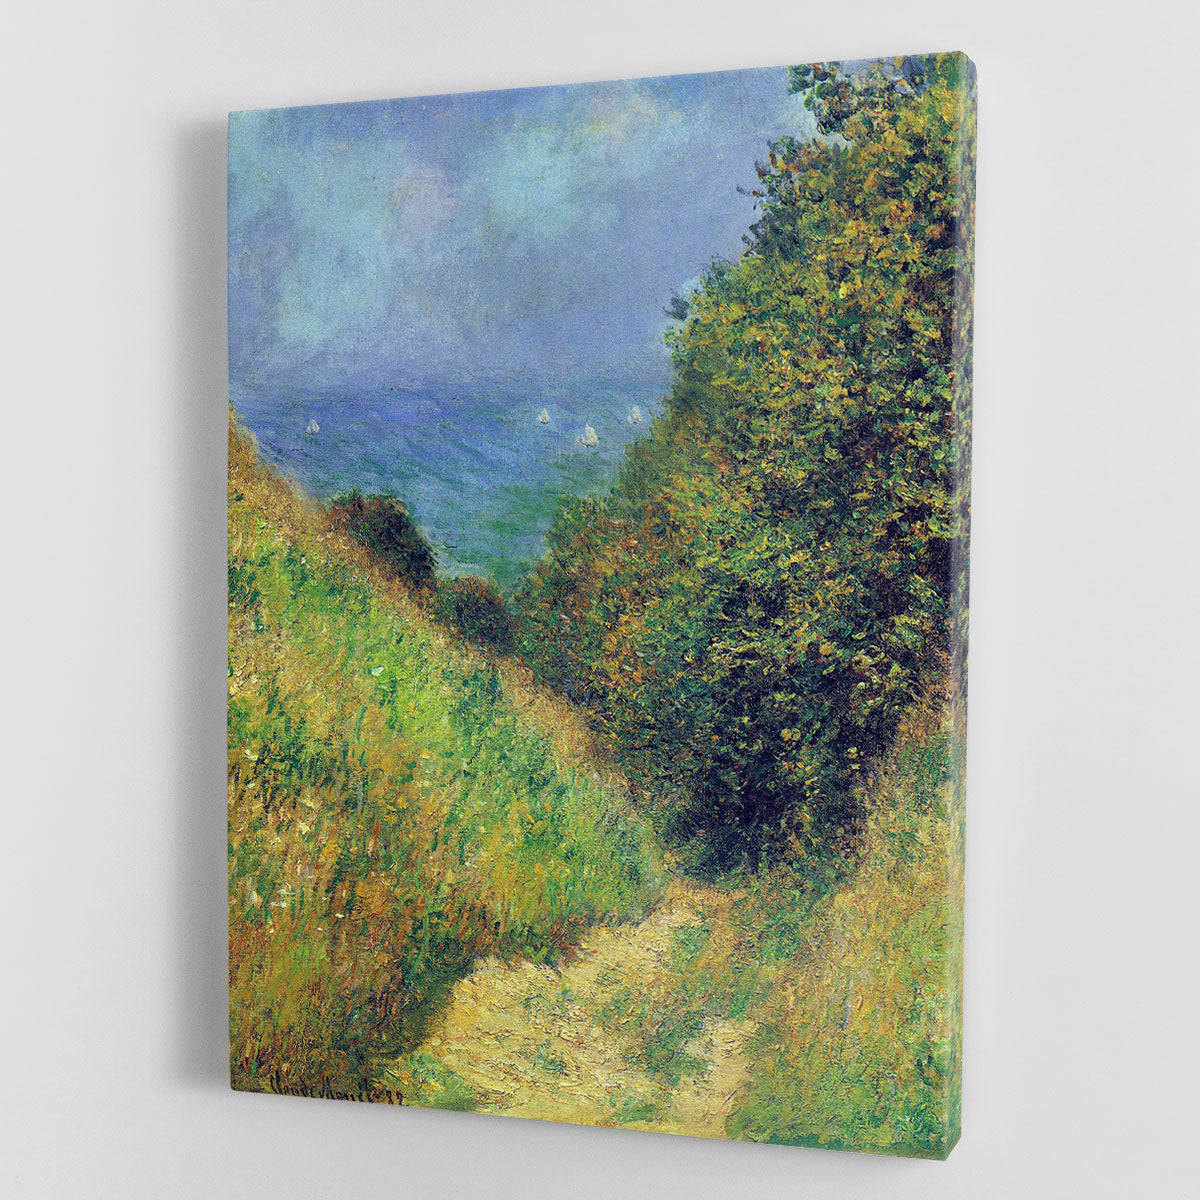 Pourville 2 by Monet Canvas Print or Poster - Canvas Art Rocks - 1